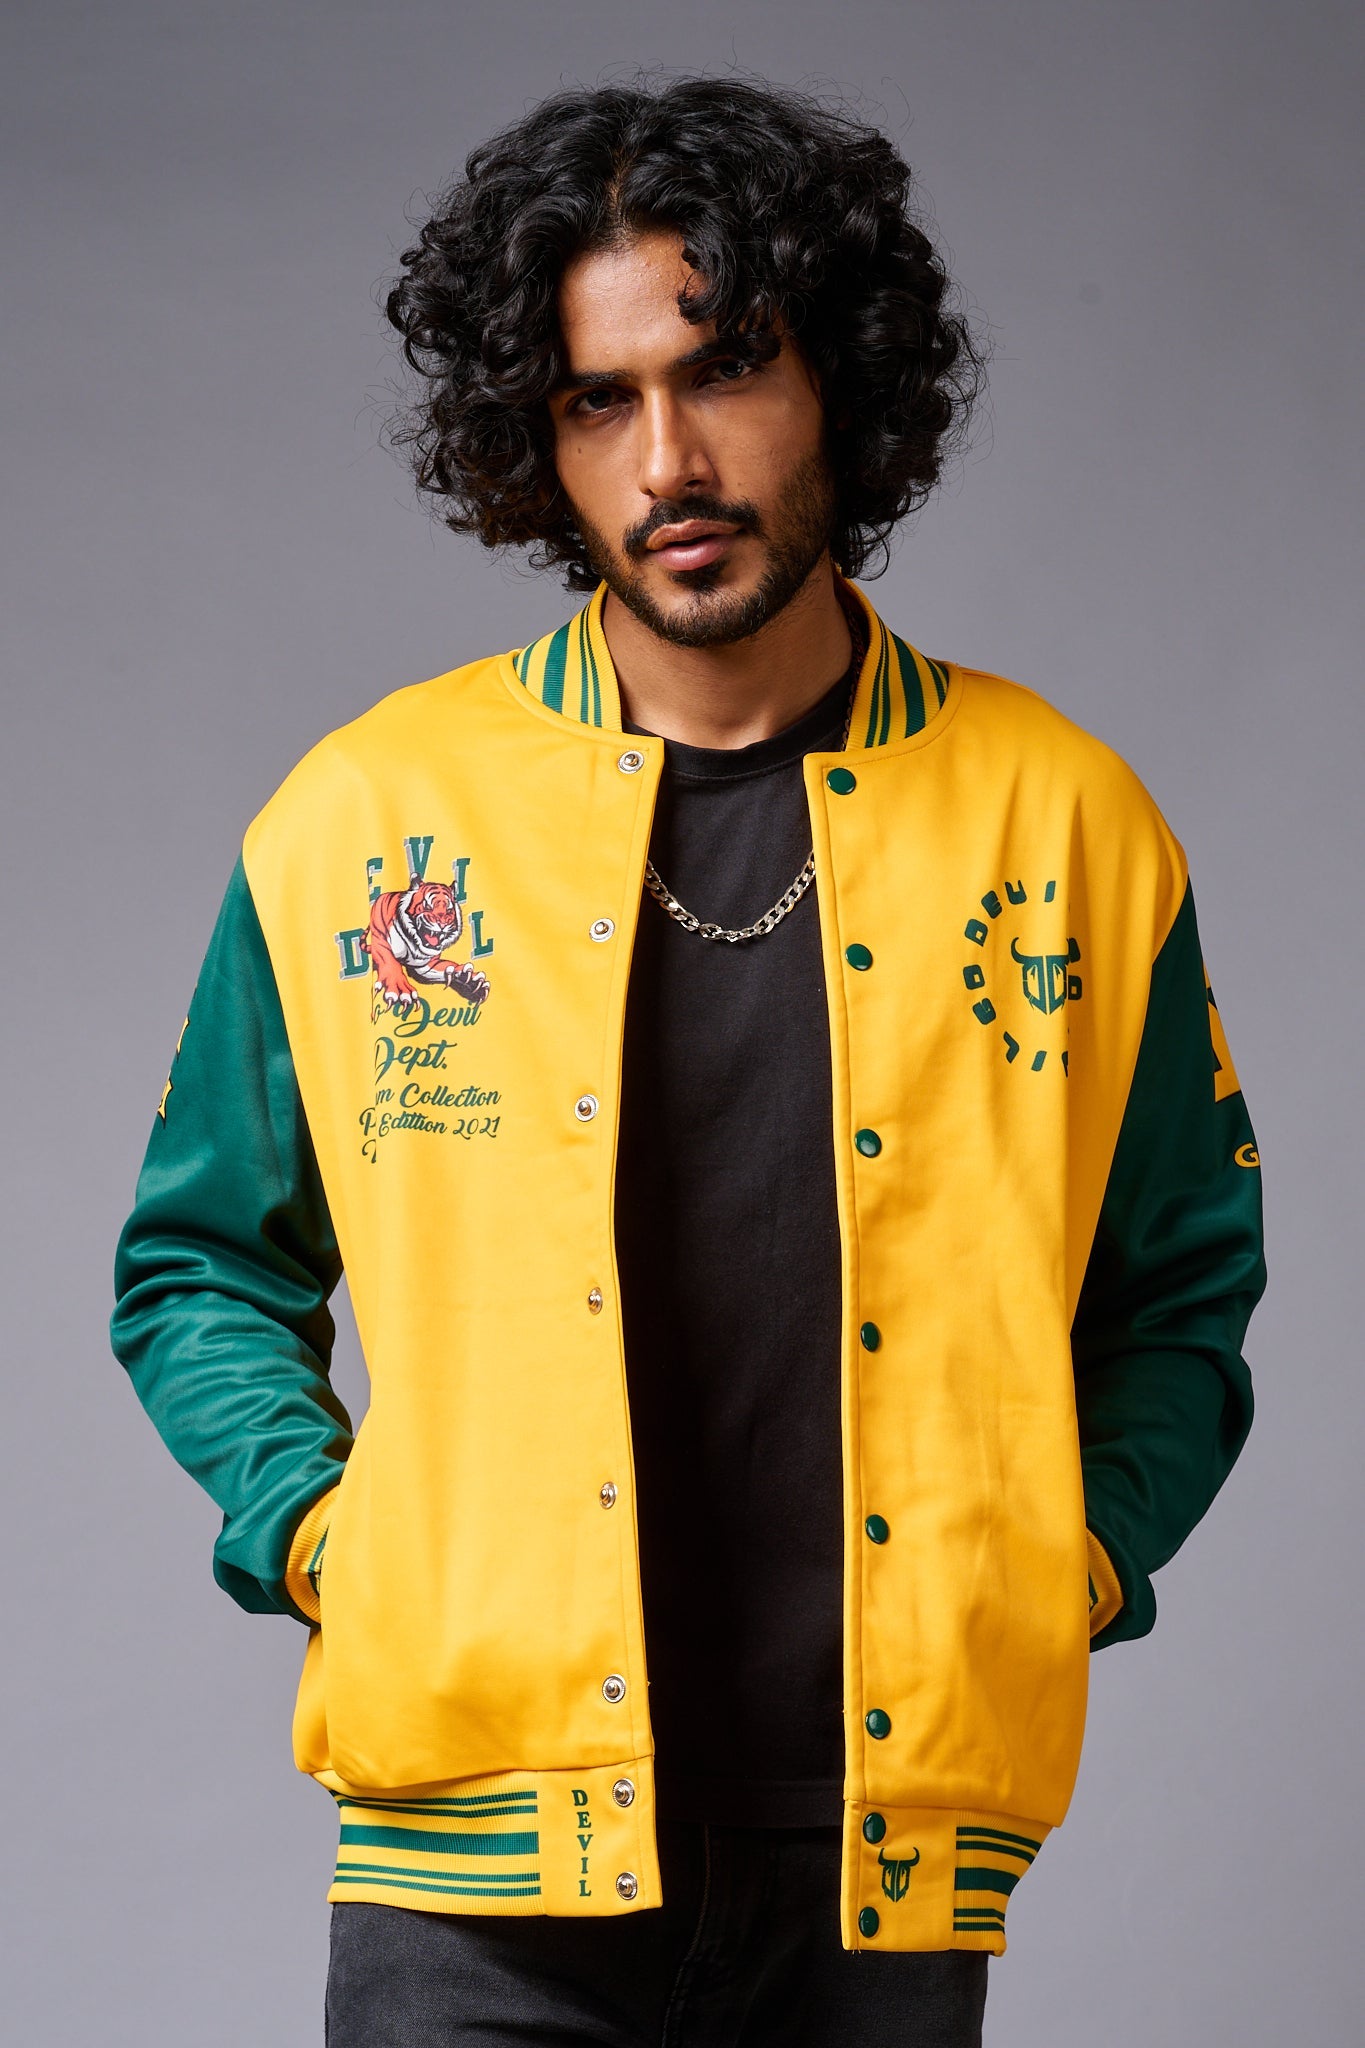 Tiger Printed Yellow & Green Varsity Jacket for Men - Go Devil